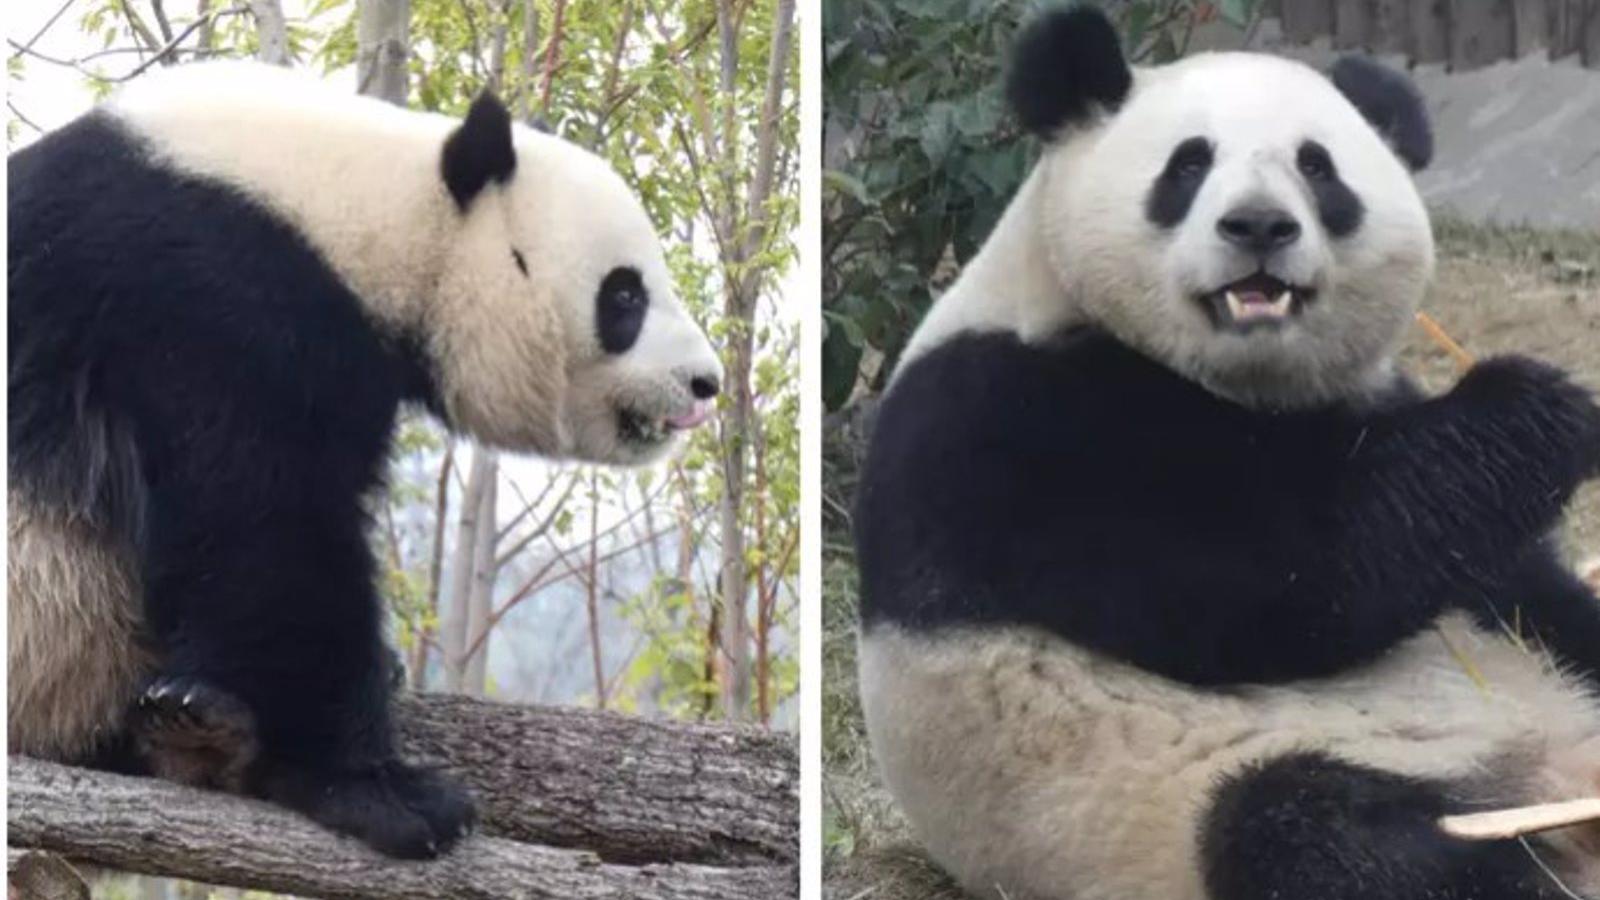 El Zoo Aquarium de Madrid recibe a una nueva pareja de pandas